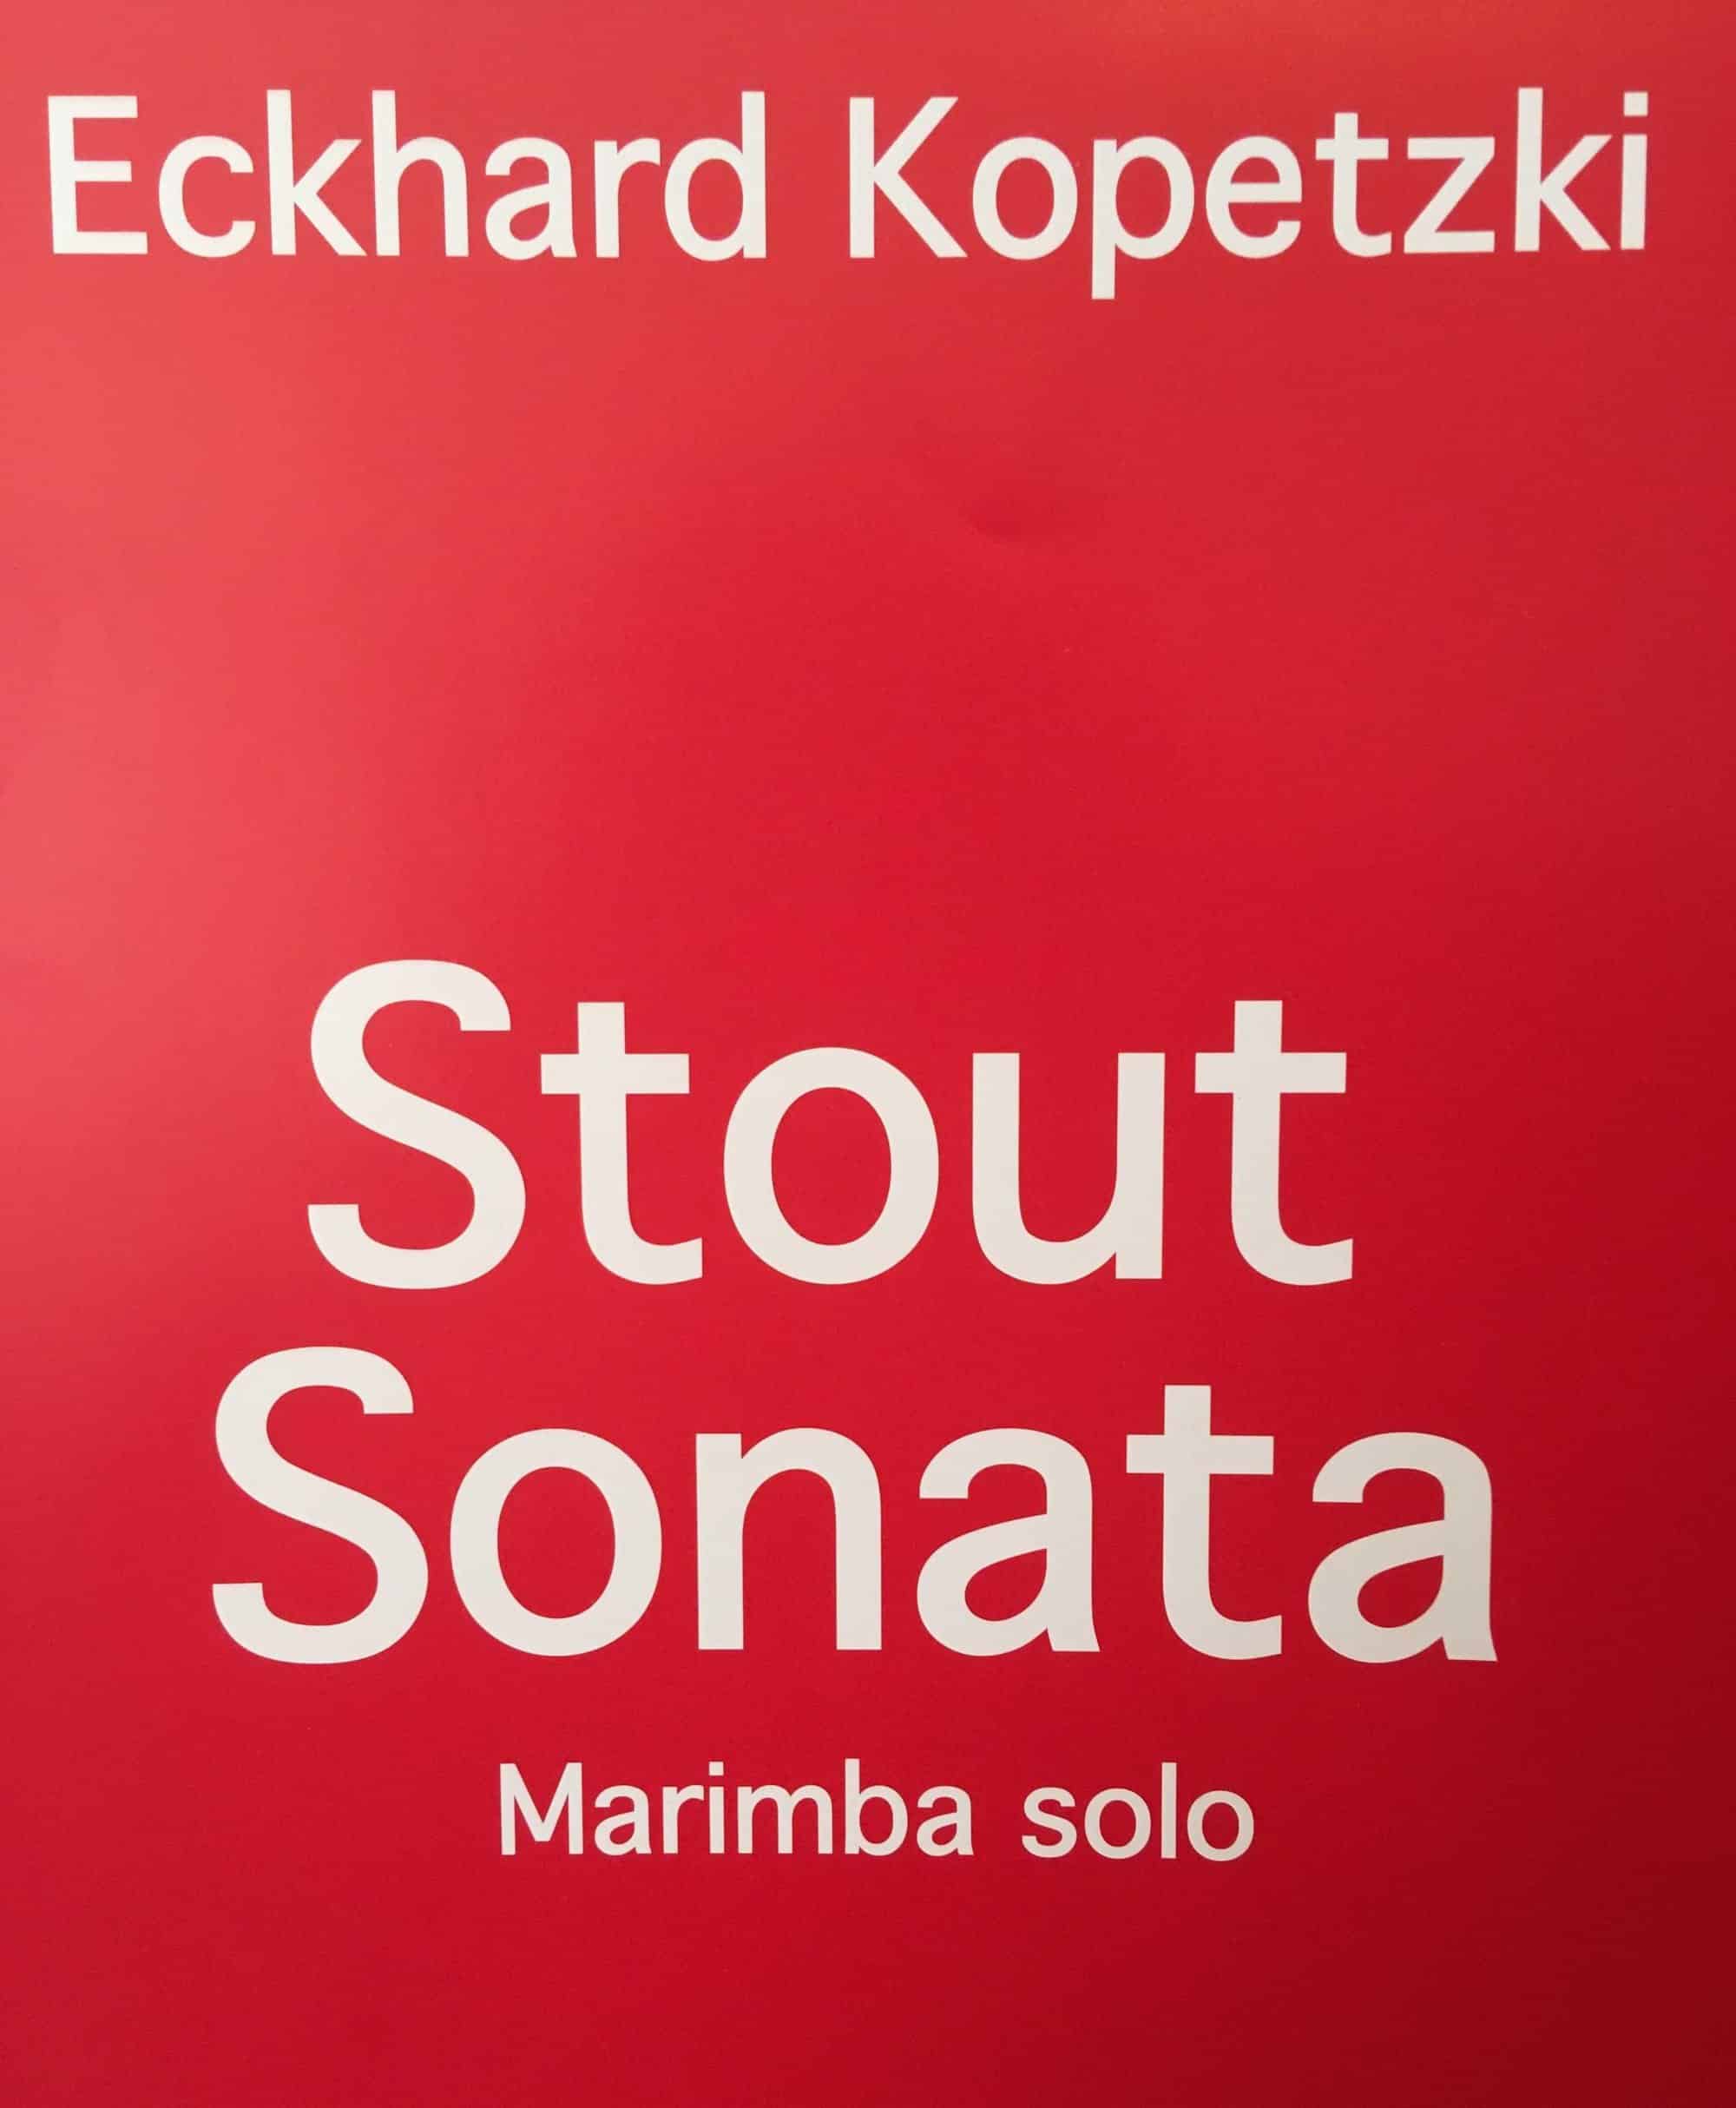 Stout Sonata by Eckhard Kopetzki